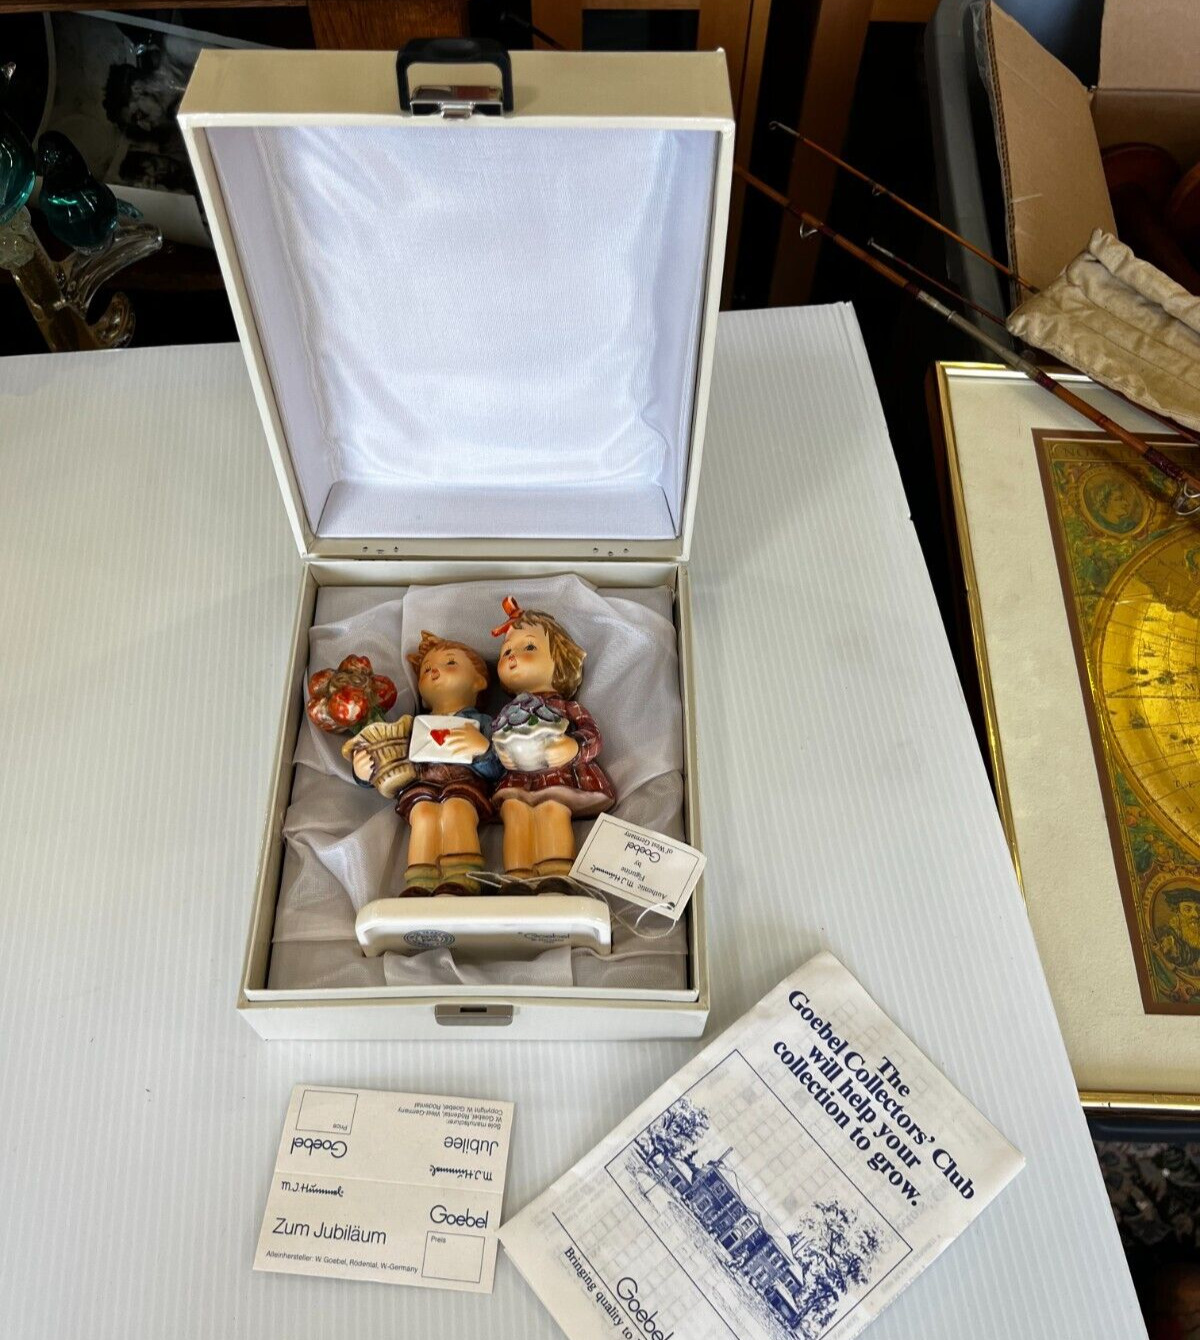 Goebal Hummel 50 Years The Love Lives On 6 1/2 Inch Figurine with Display Box